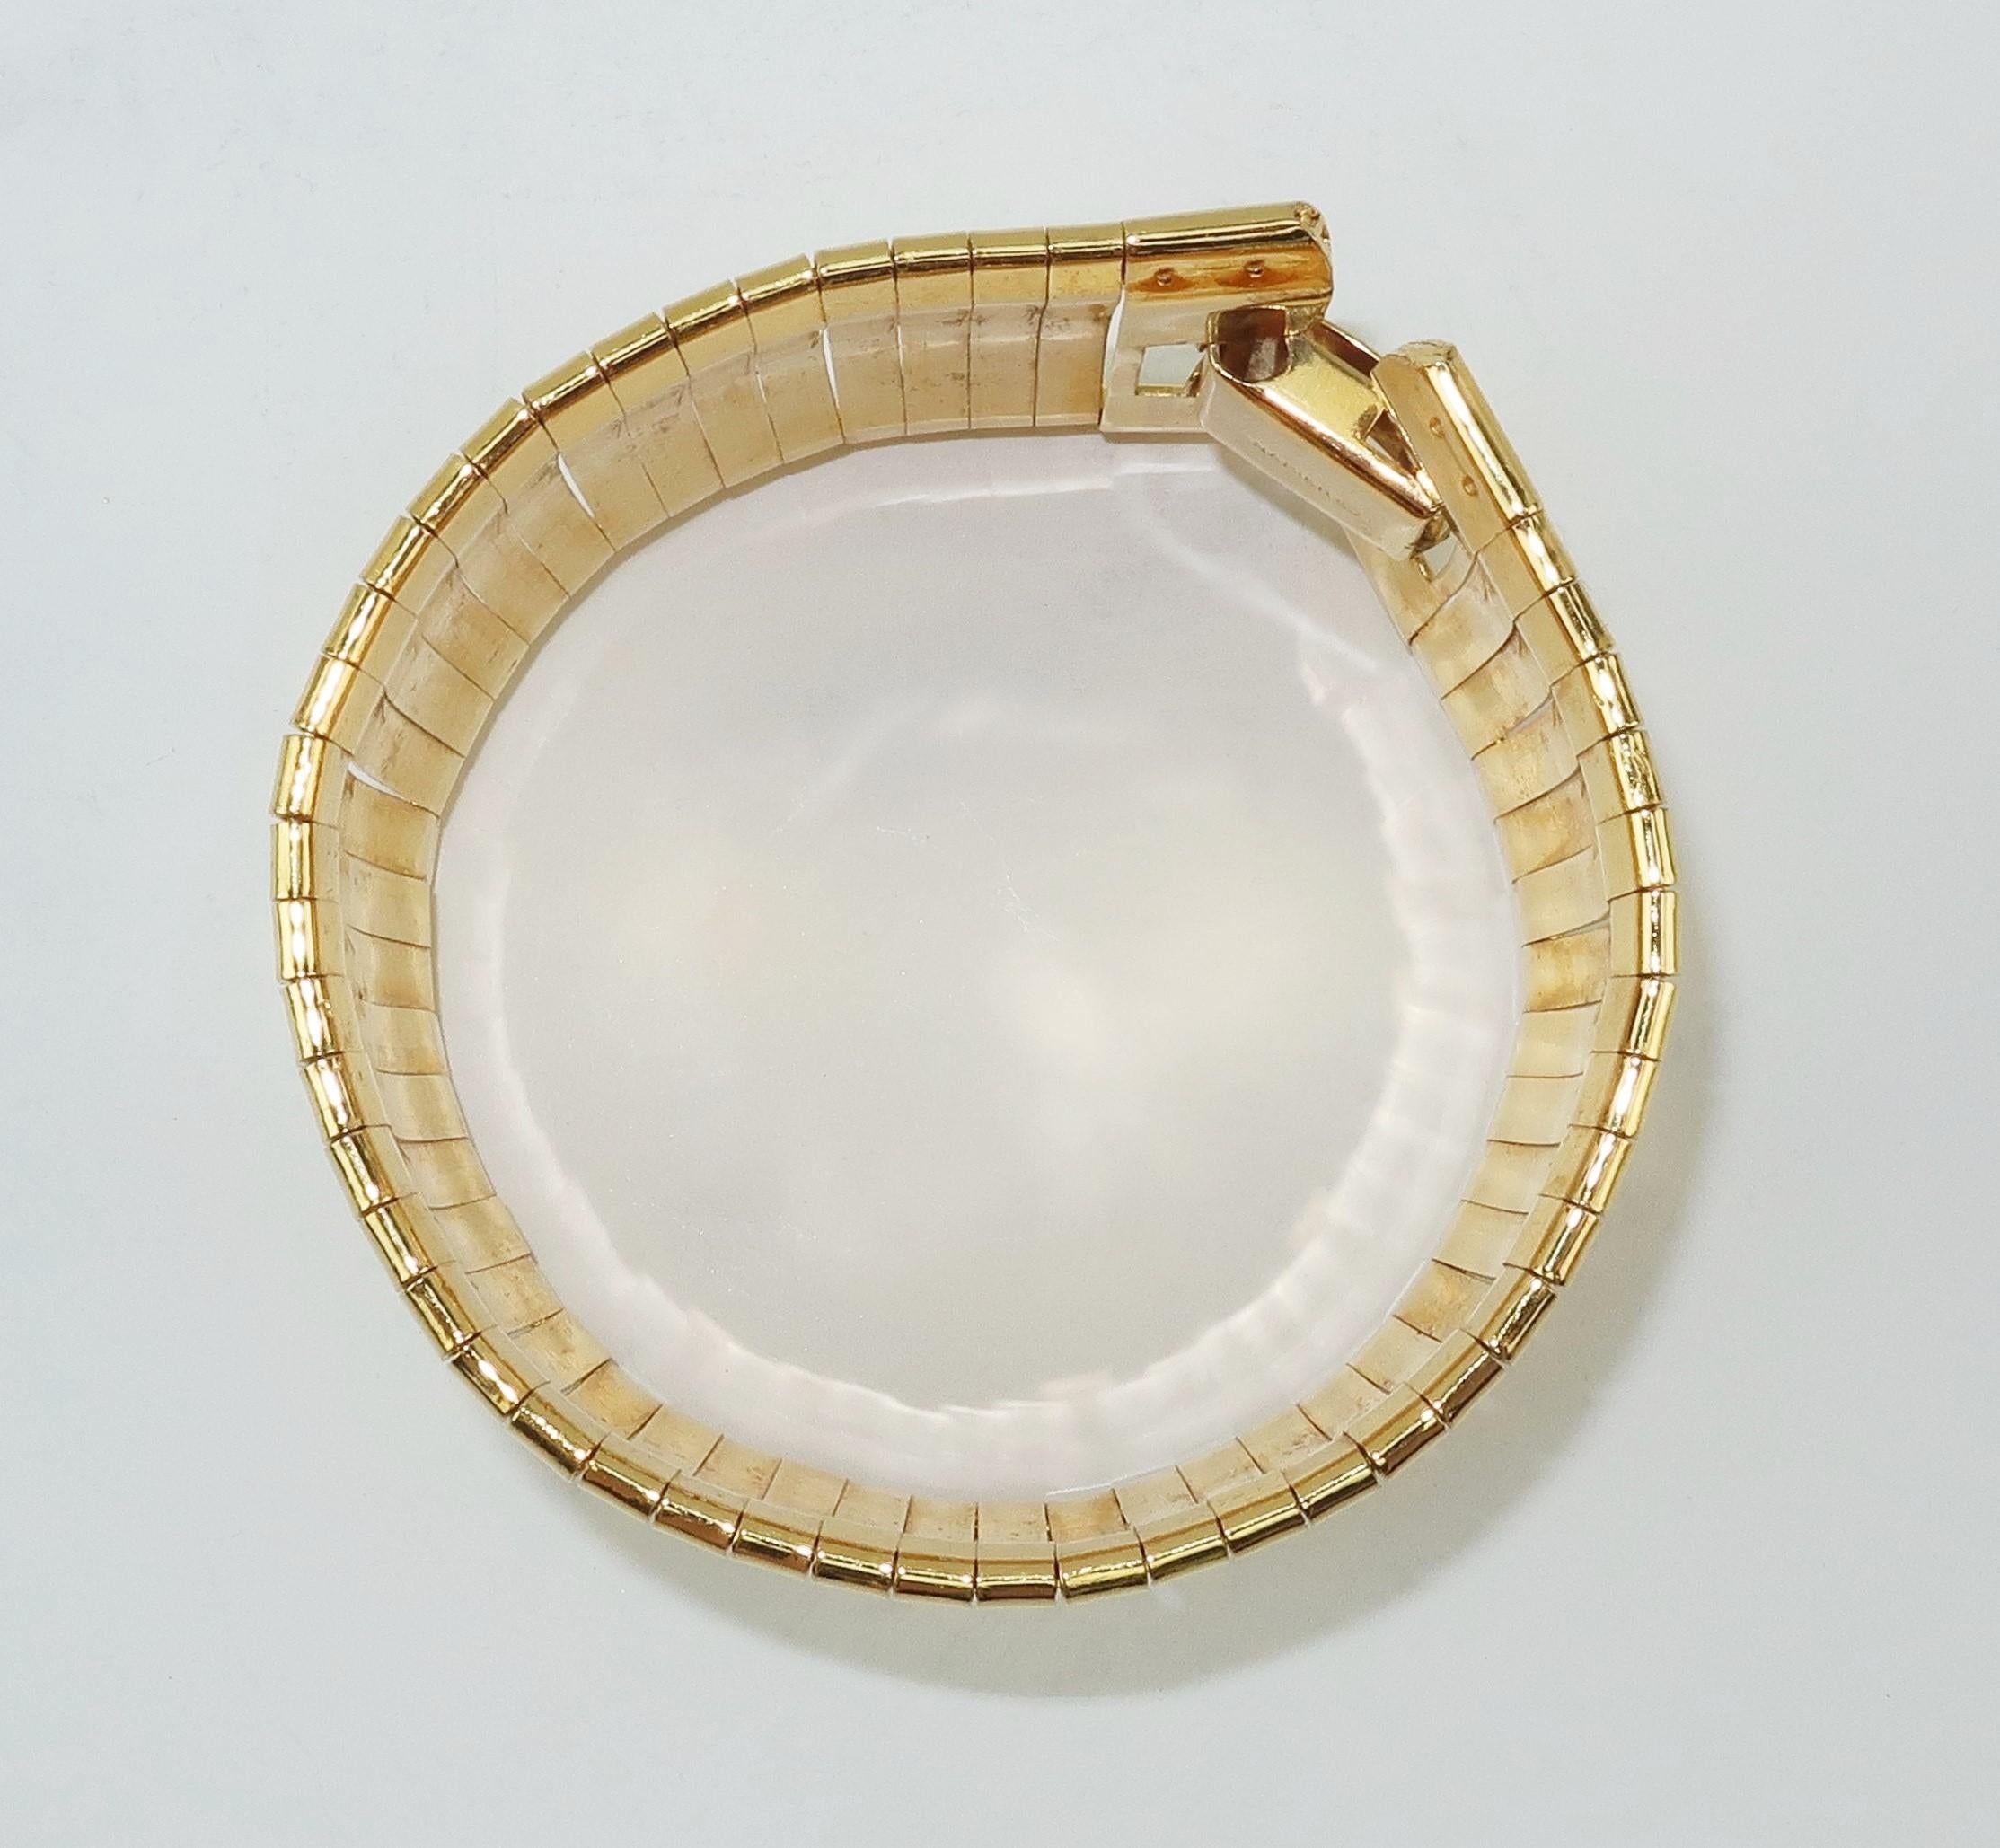 Modernist Napier Gold Band Space Age Bangle Bracelet, 1960's